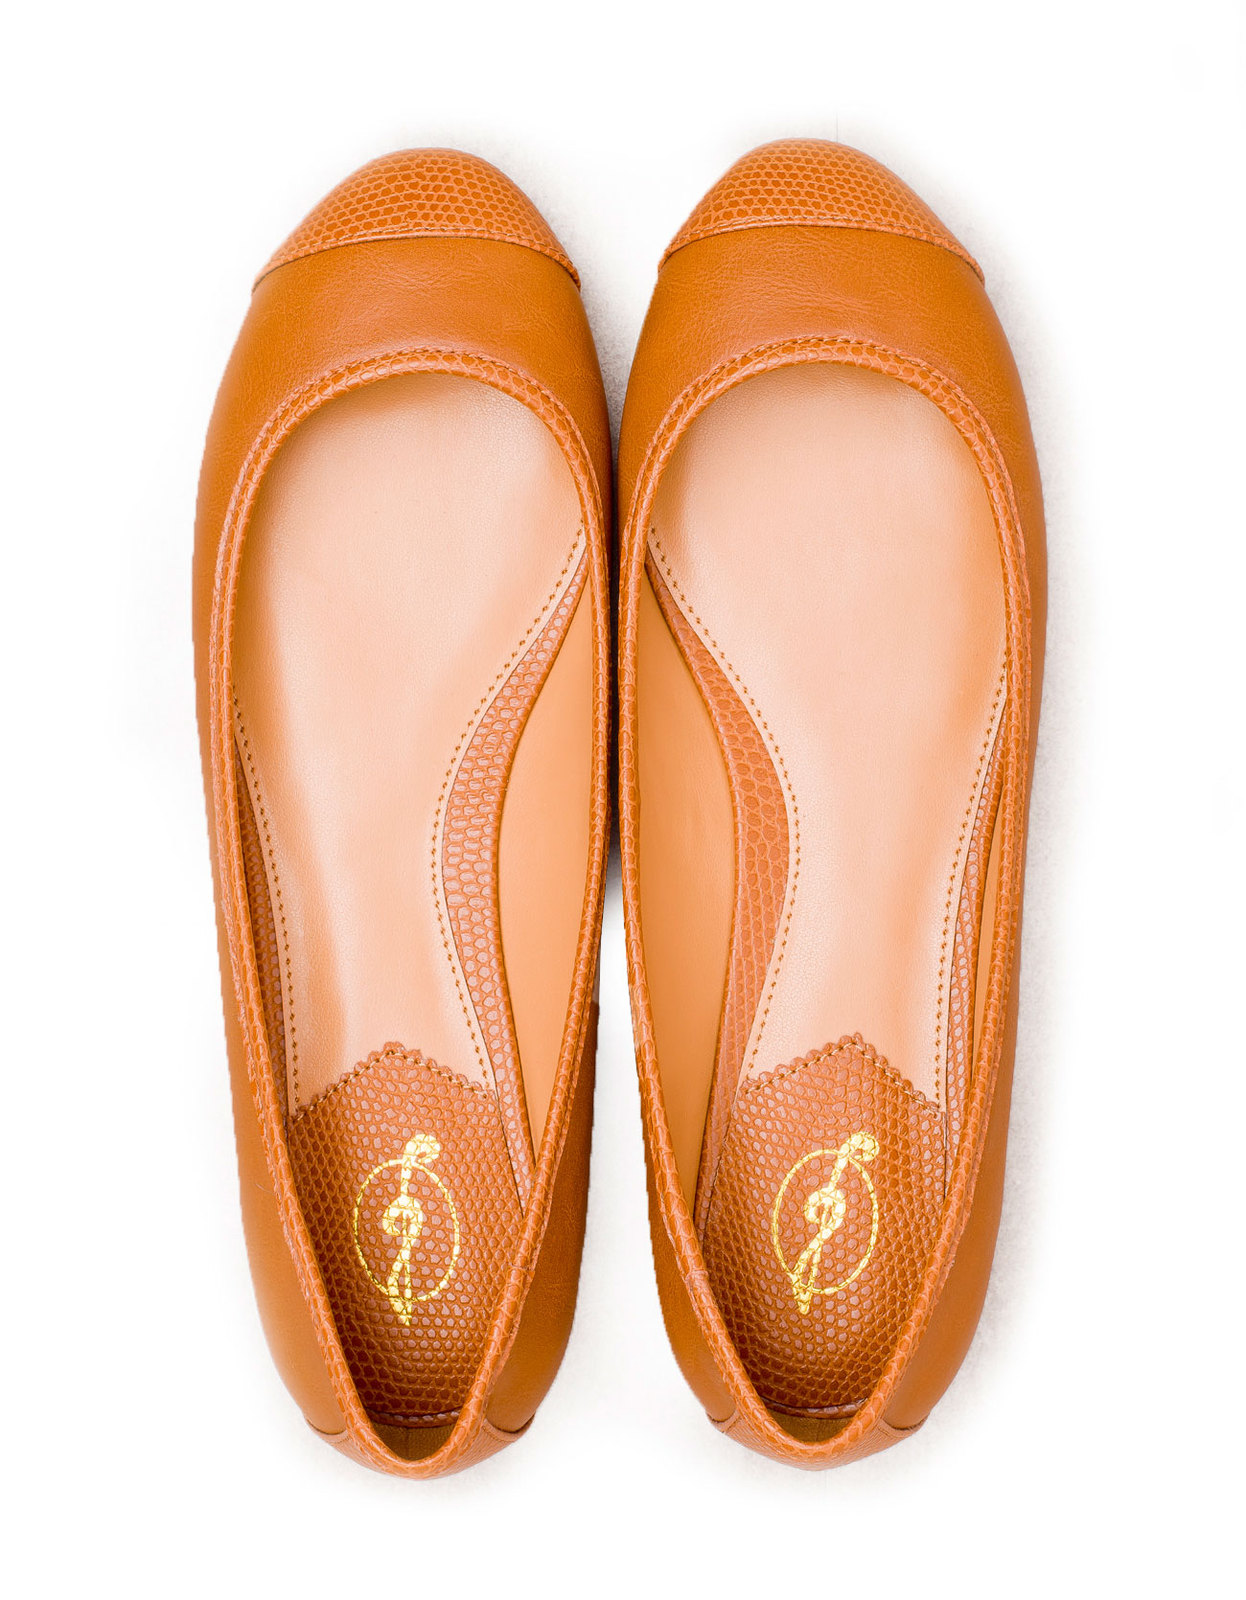 Stradivarius világos barna balerina cipő 2012.2.28 #2207 fotója